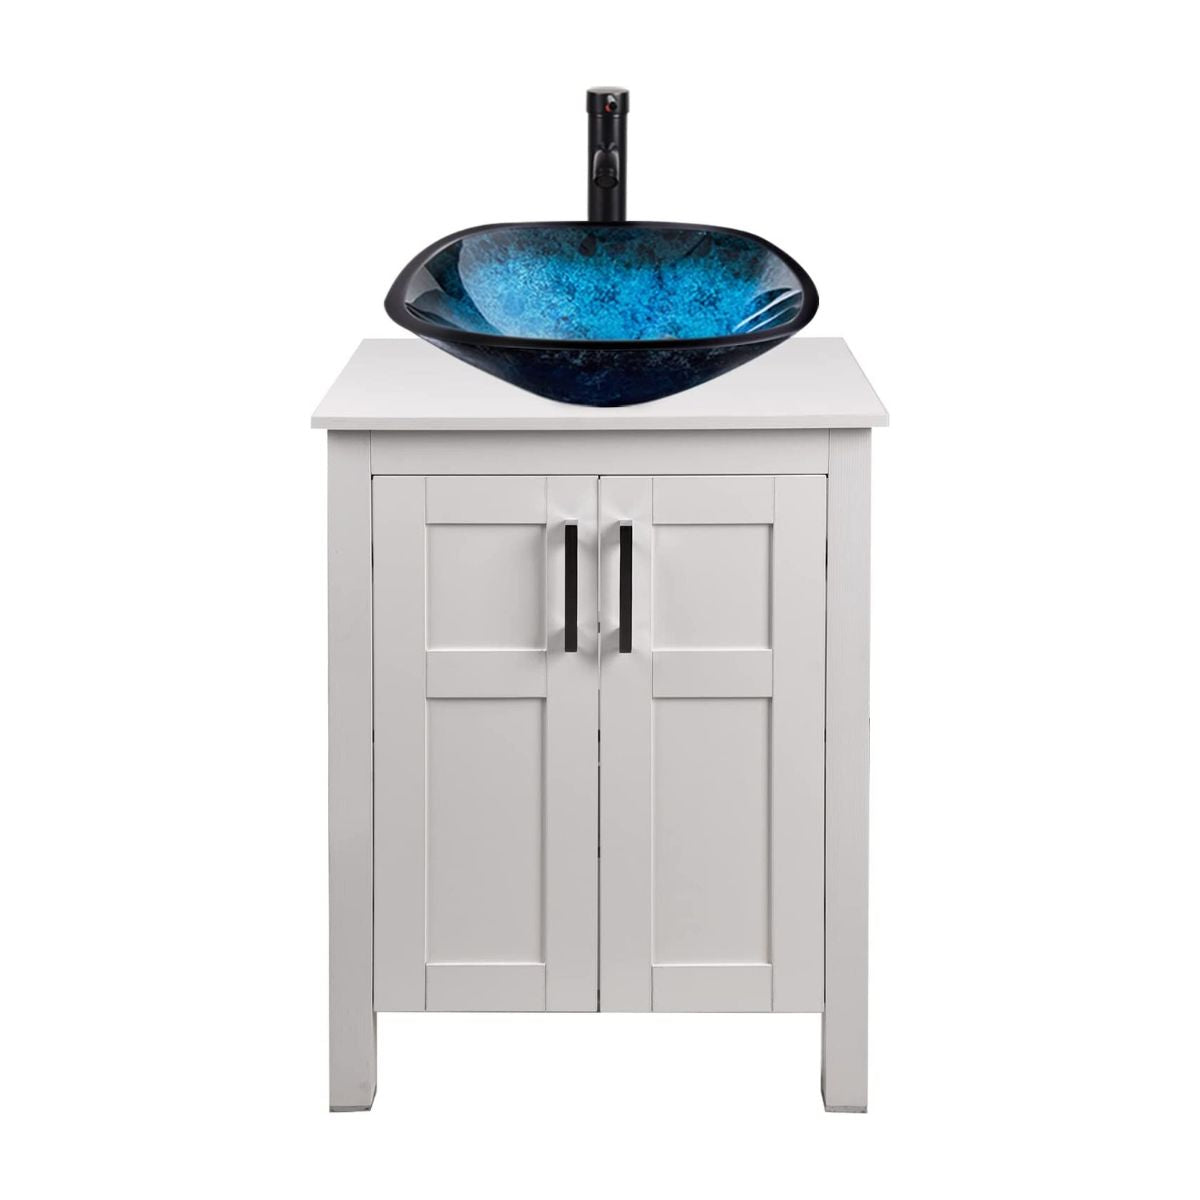 Elecwish White Bathroom Vanity and Square Blue Sink Set HW1120-WH